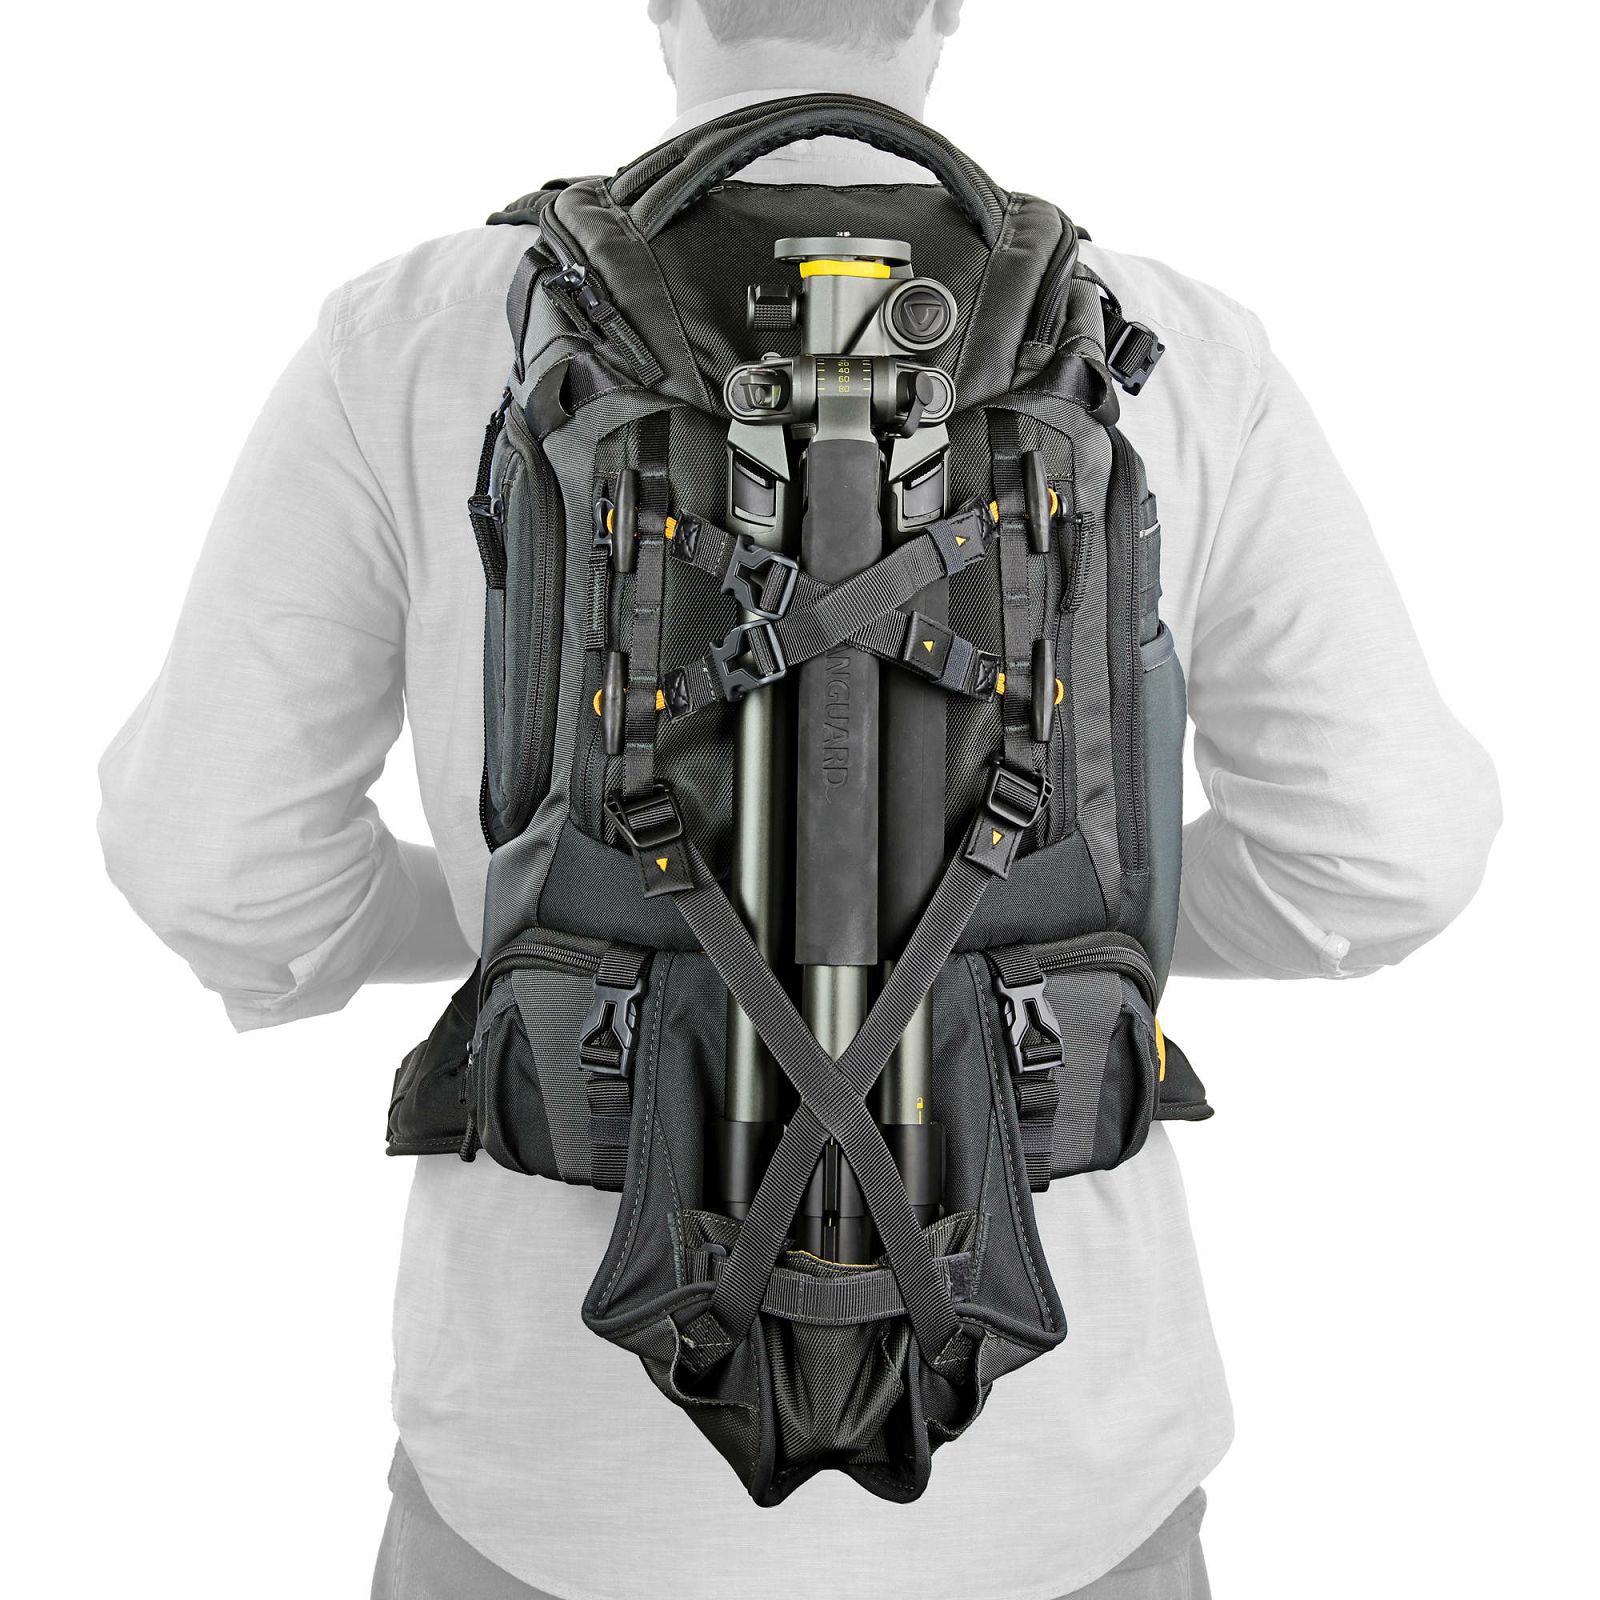 Vanguard Alta SKY 45D Backpack ruksak za foto opremu